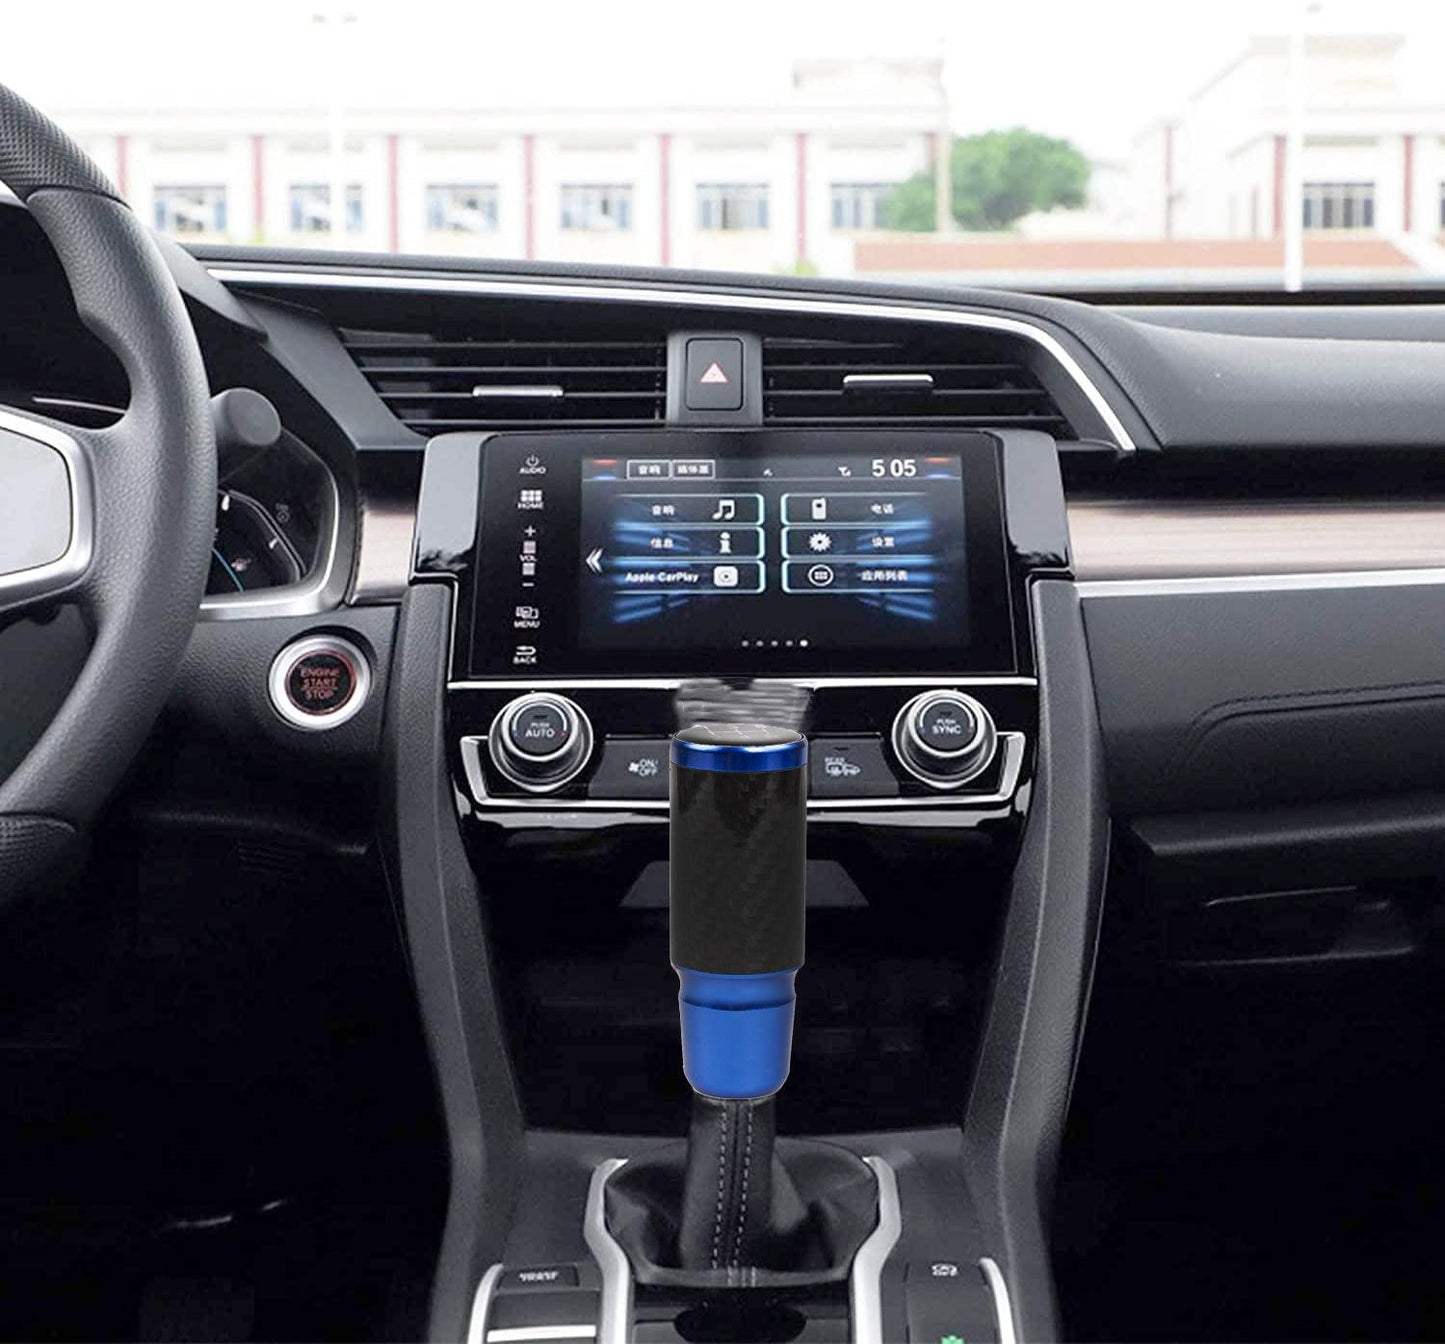 RASTP Universal Carbon Fiber Auto Manual Gear Stick Lever Car Shift Knob 5 Speed with 3 Adapters - RASTP